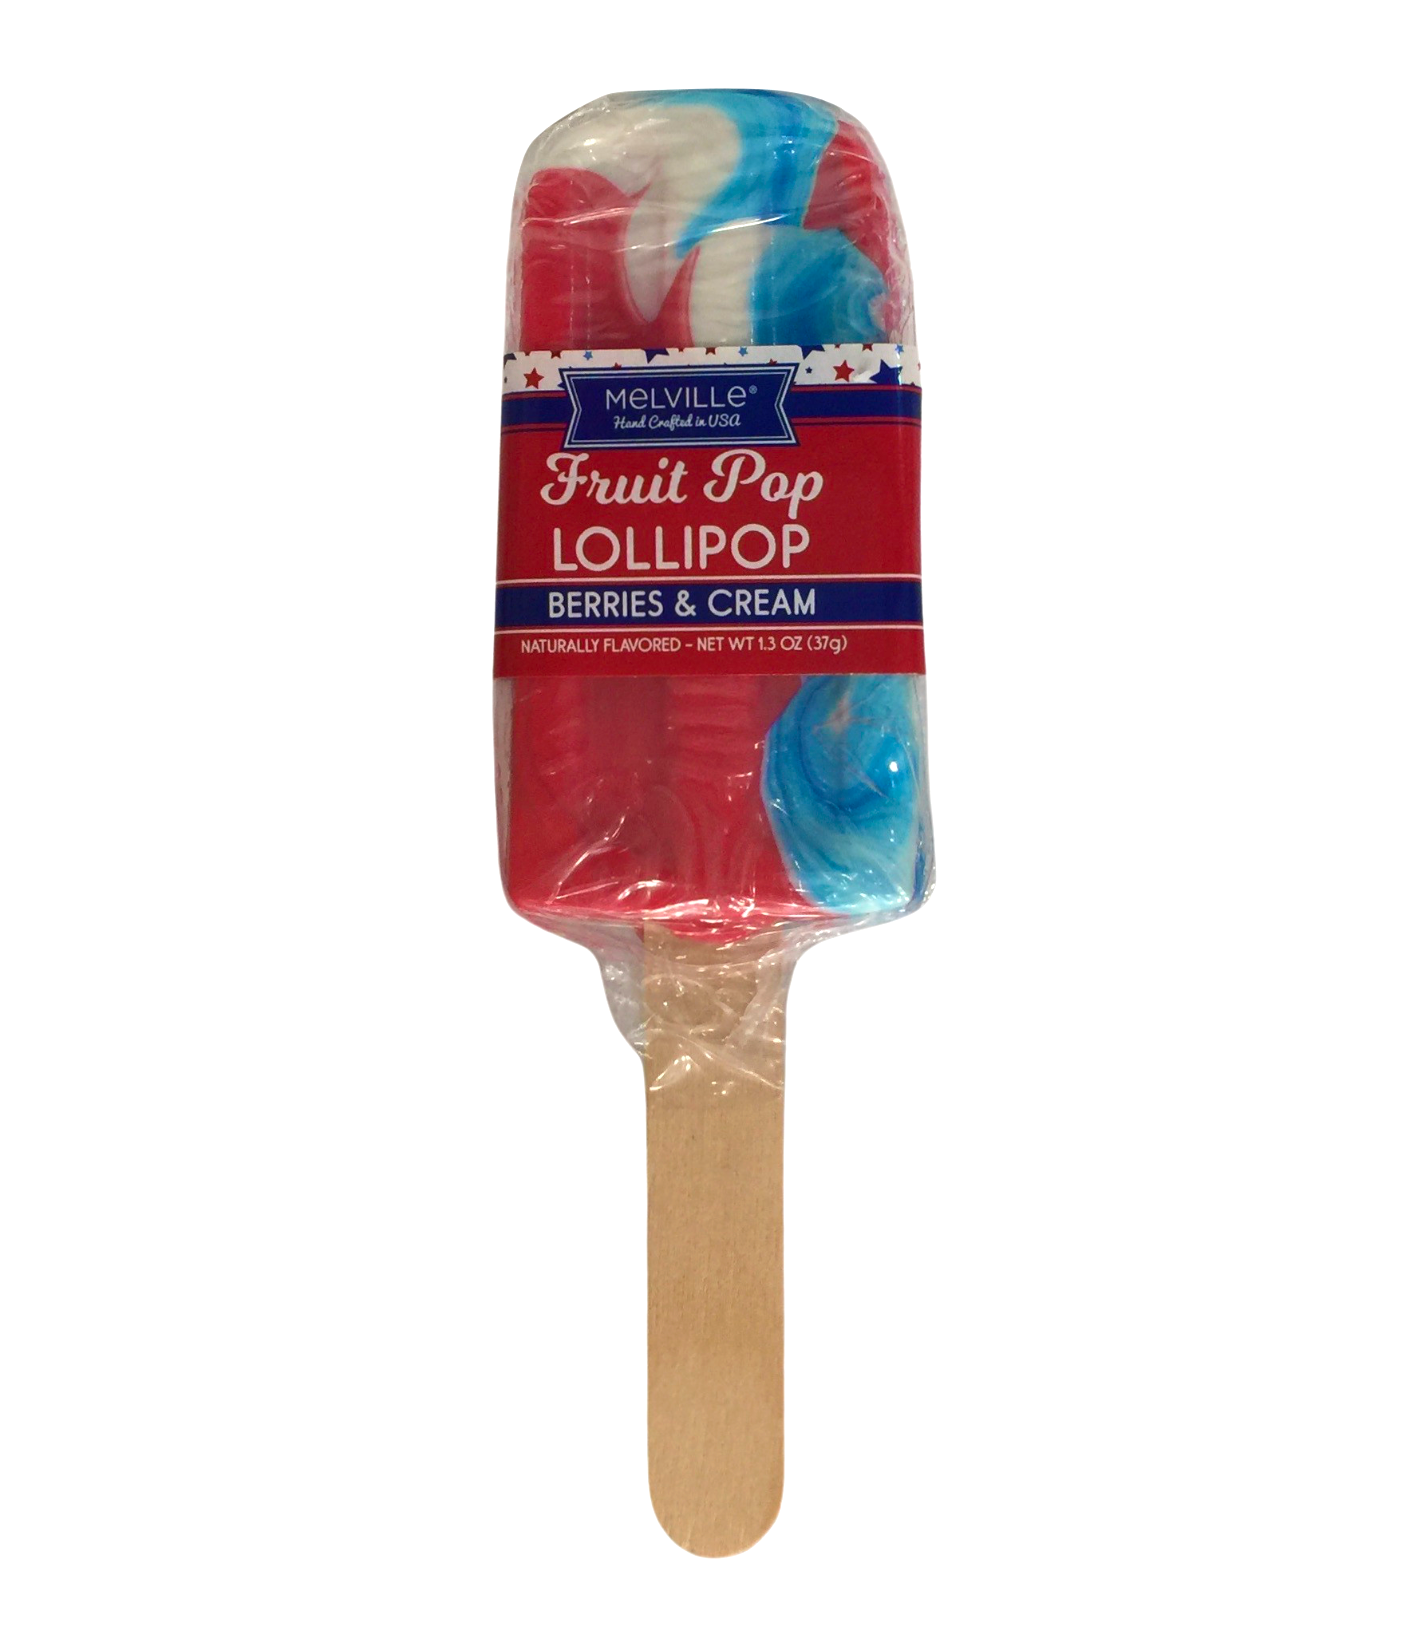 Melville patriotic berries & vanilla ice cream lollipop 1.3oz (37g)